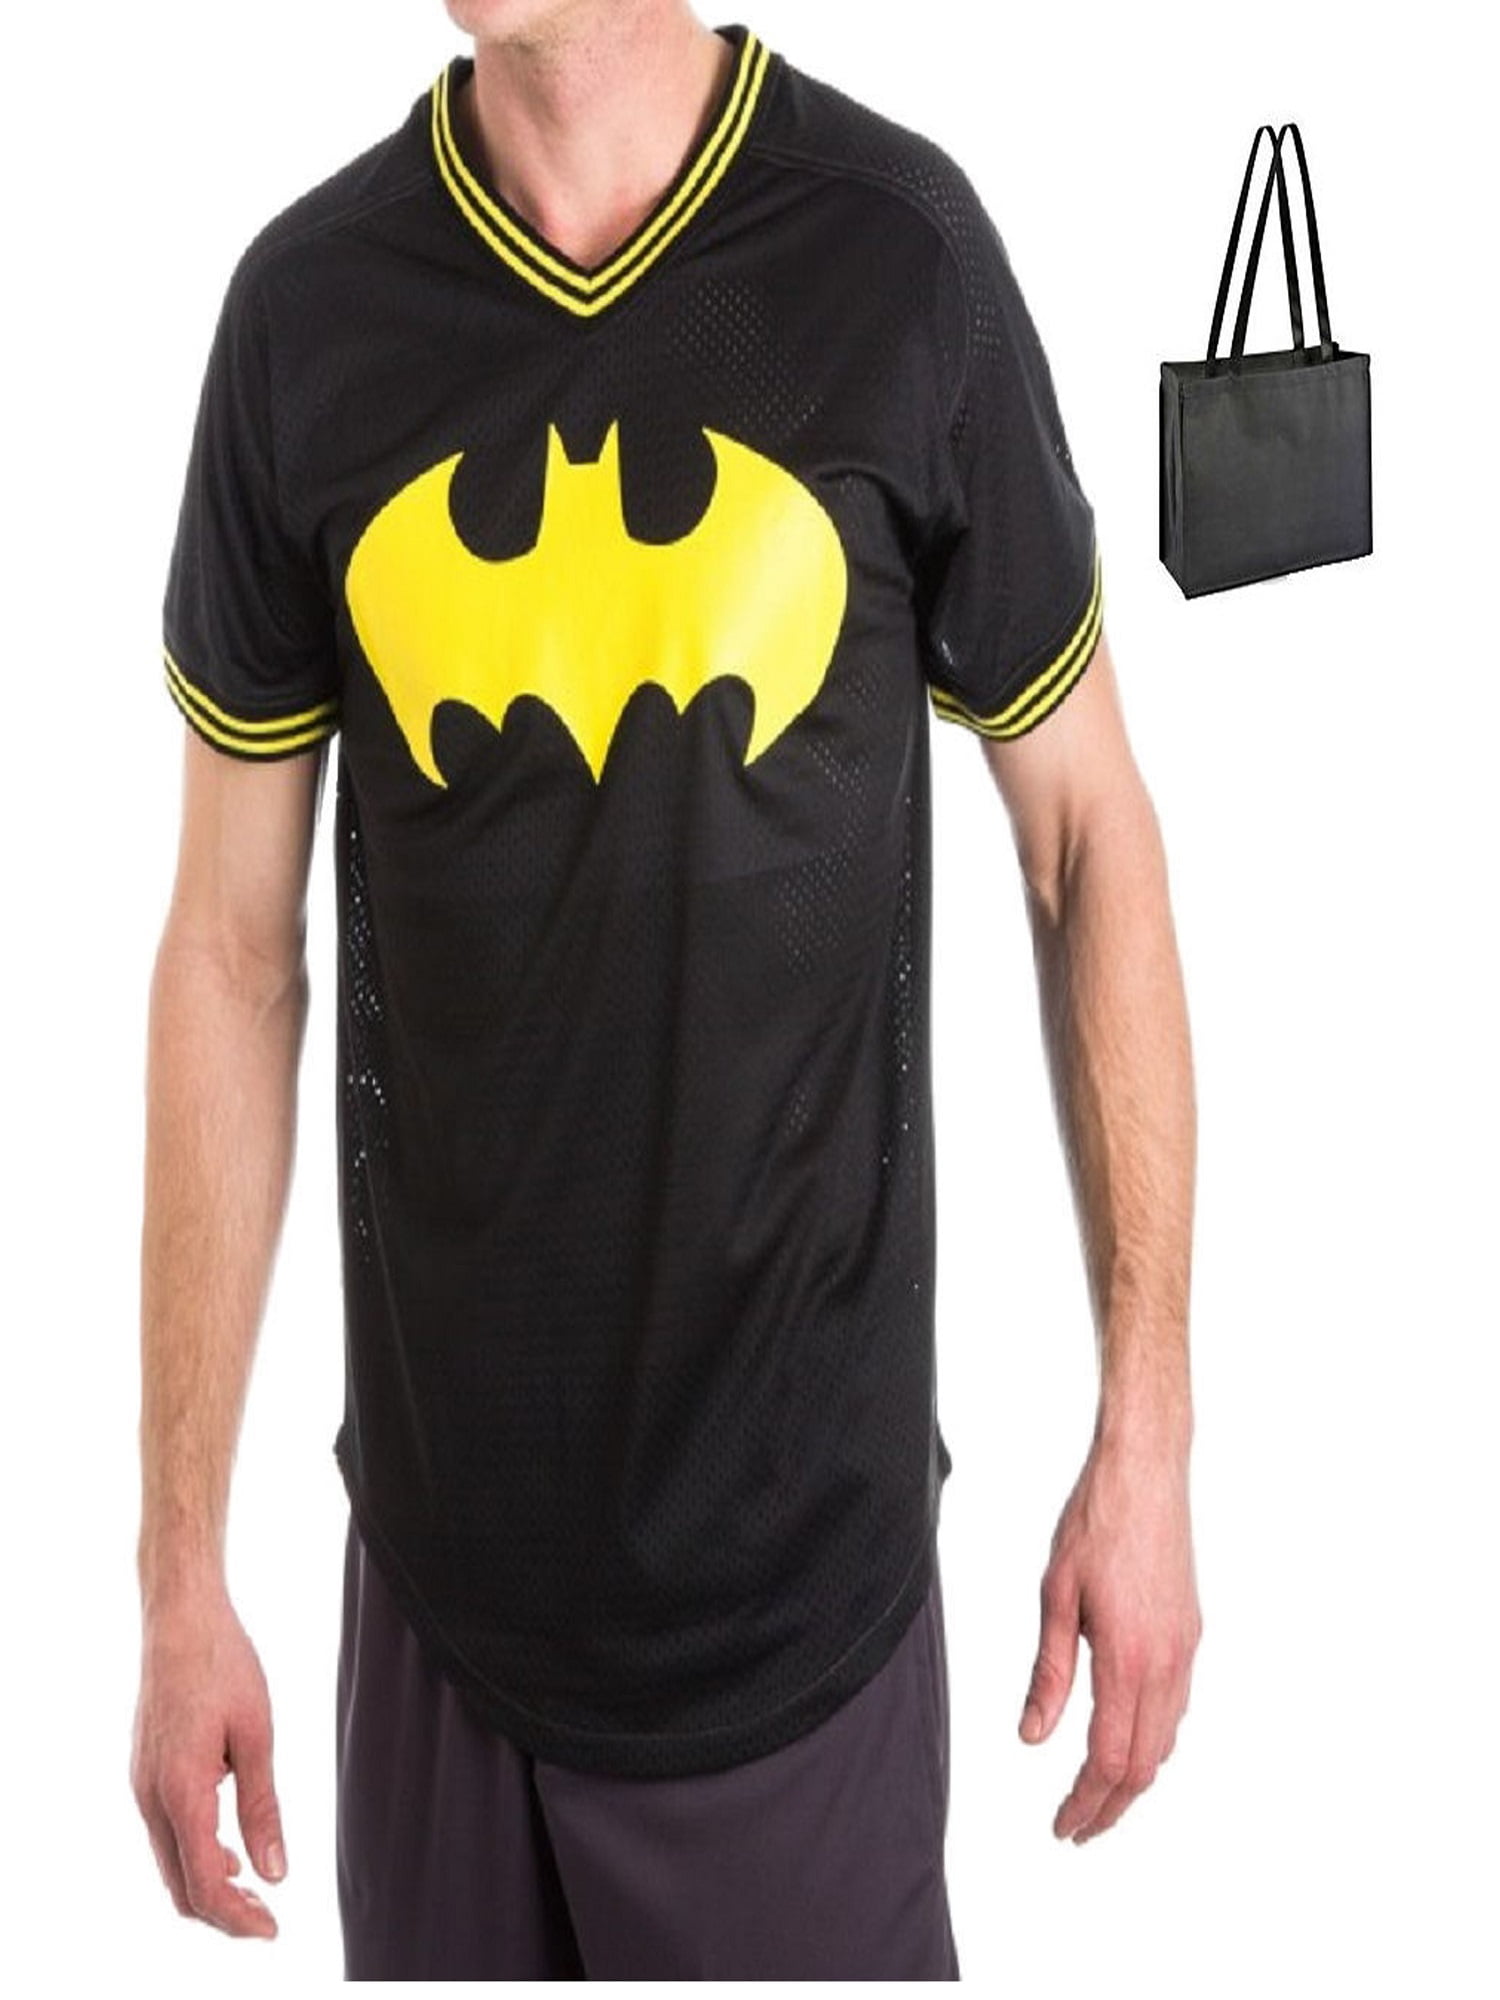 Batman Mens' Mesh Jersey and Reusable Tote - Gift Set - FREE SHIPPING -  